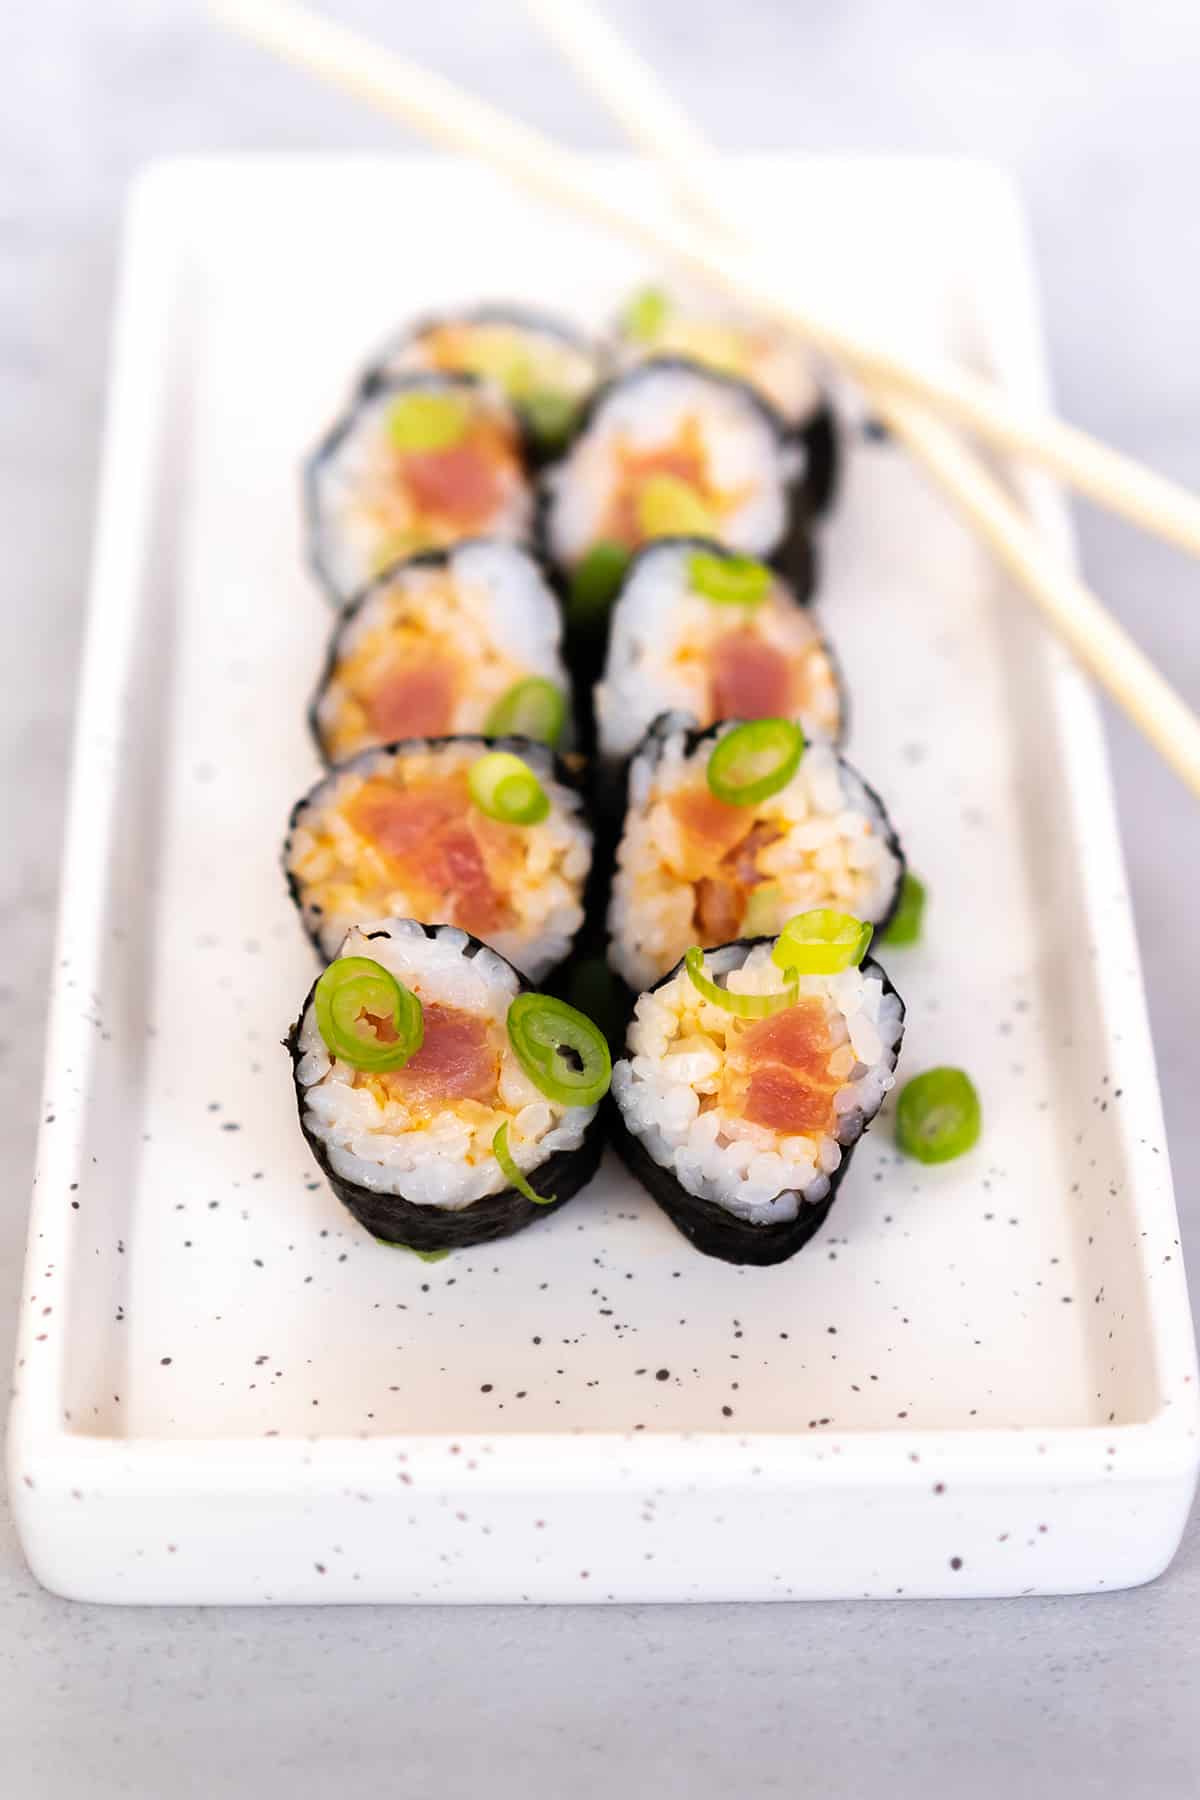 Roll Your Own Sushi Class at Joyful Gourmet